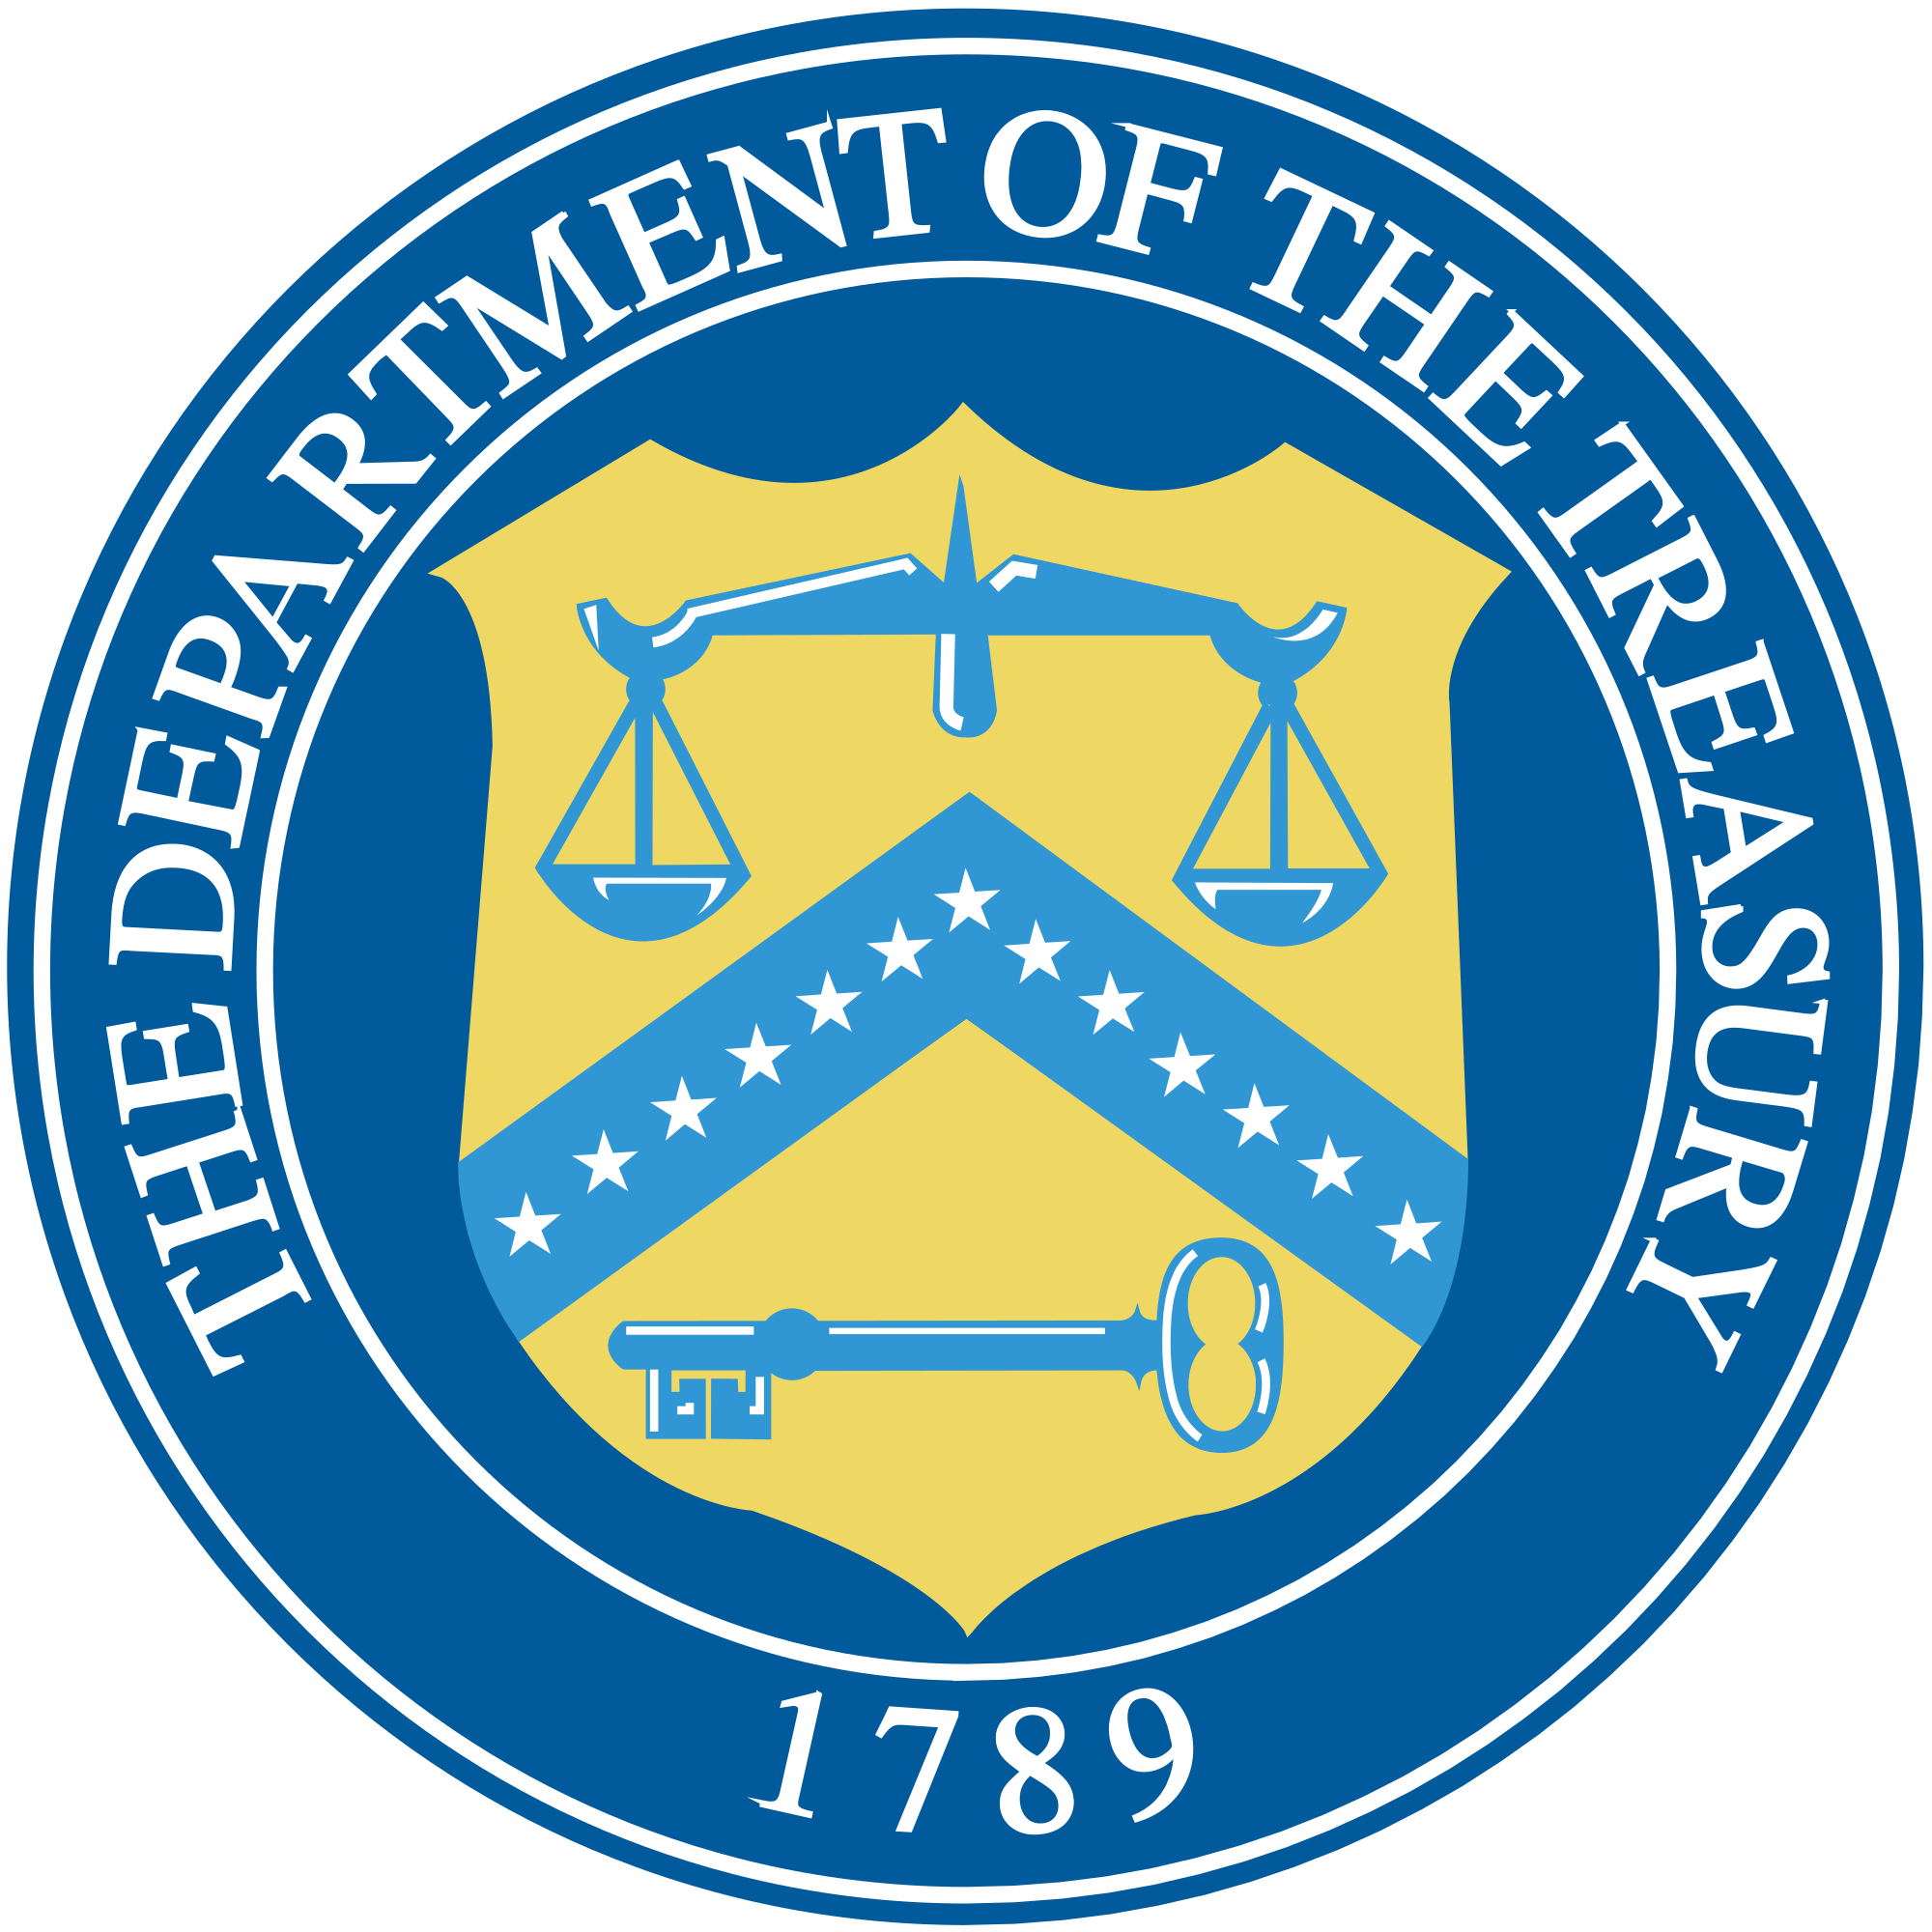 U.S. Treasury followed proper procedures in rejecting Trump tax return request -inspector general